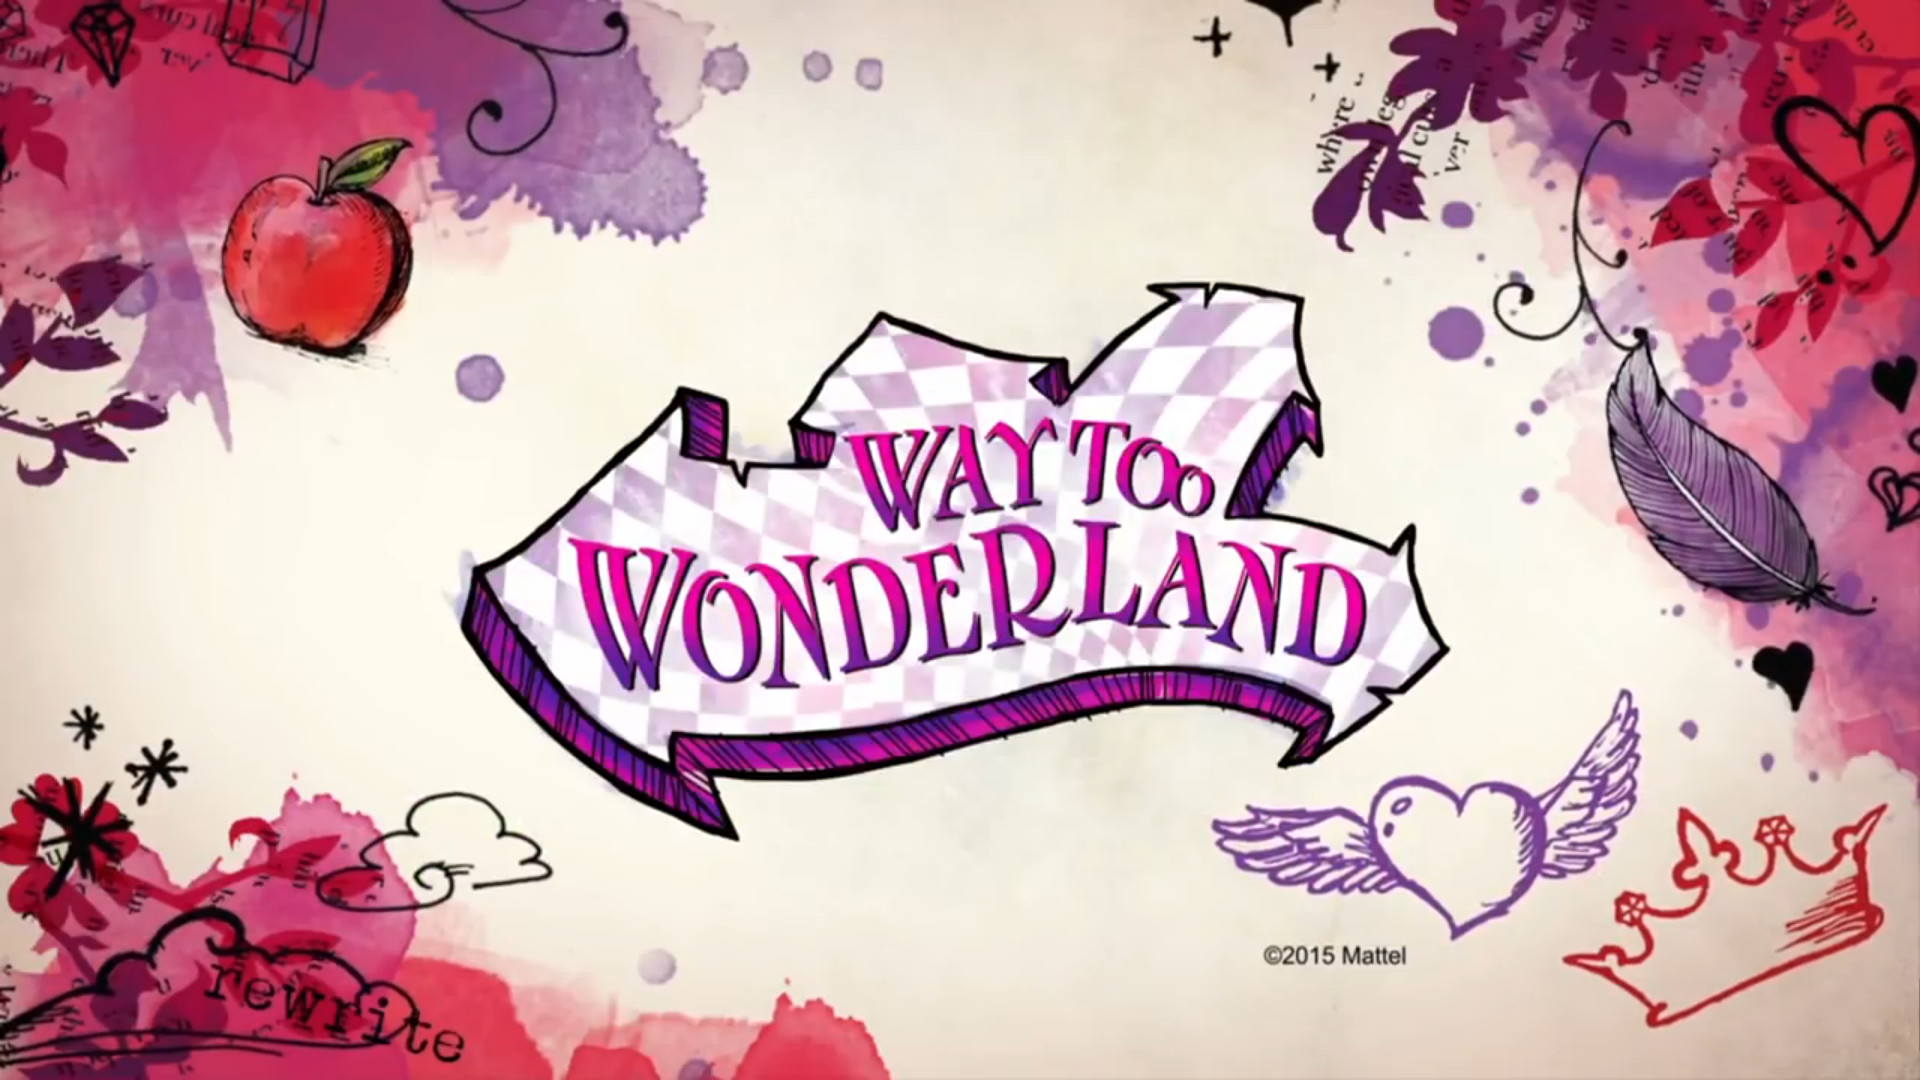 1920x1080 Way Too Wonderland | Royal & Rebel Pedia Wiki | FANDOM powered by Wikia